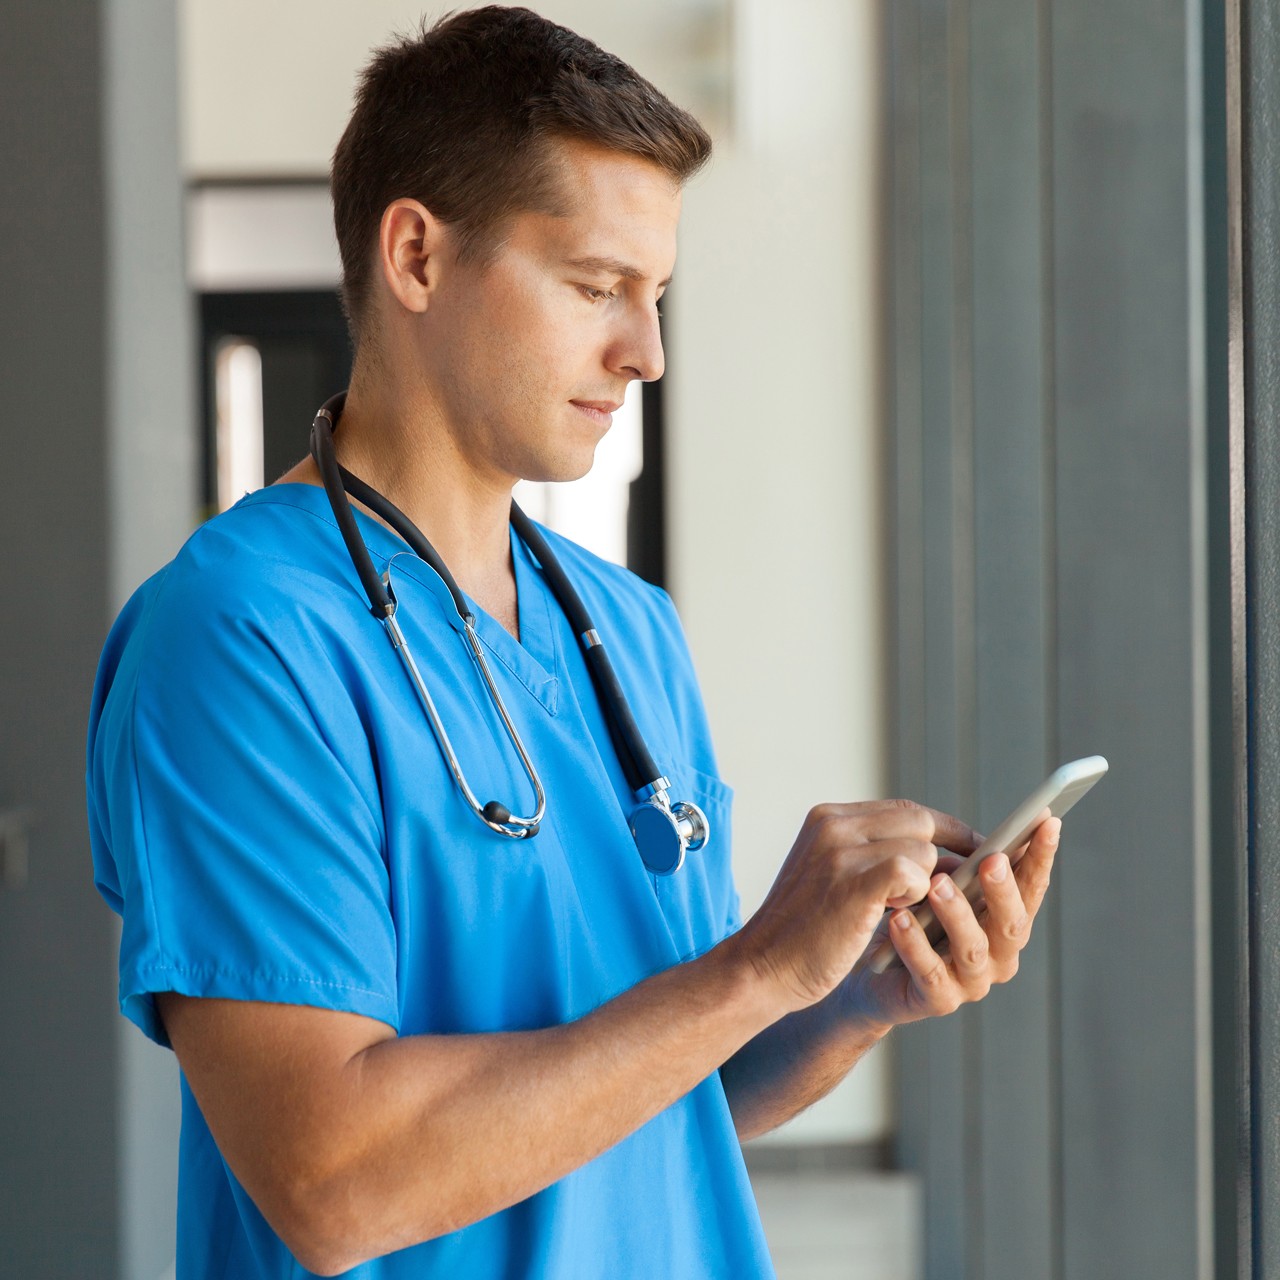 medical professional using smart phone